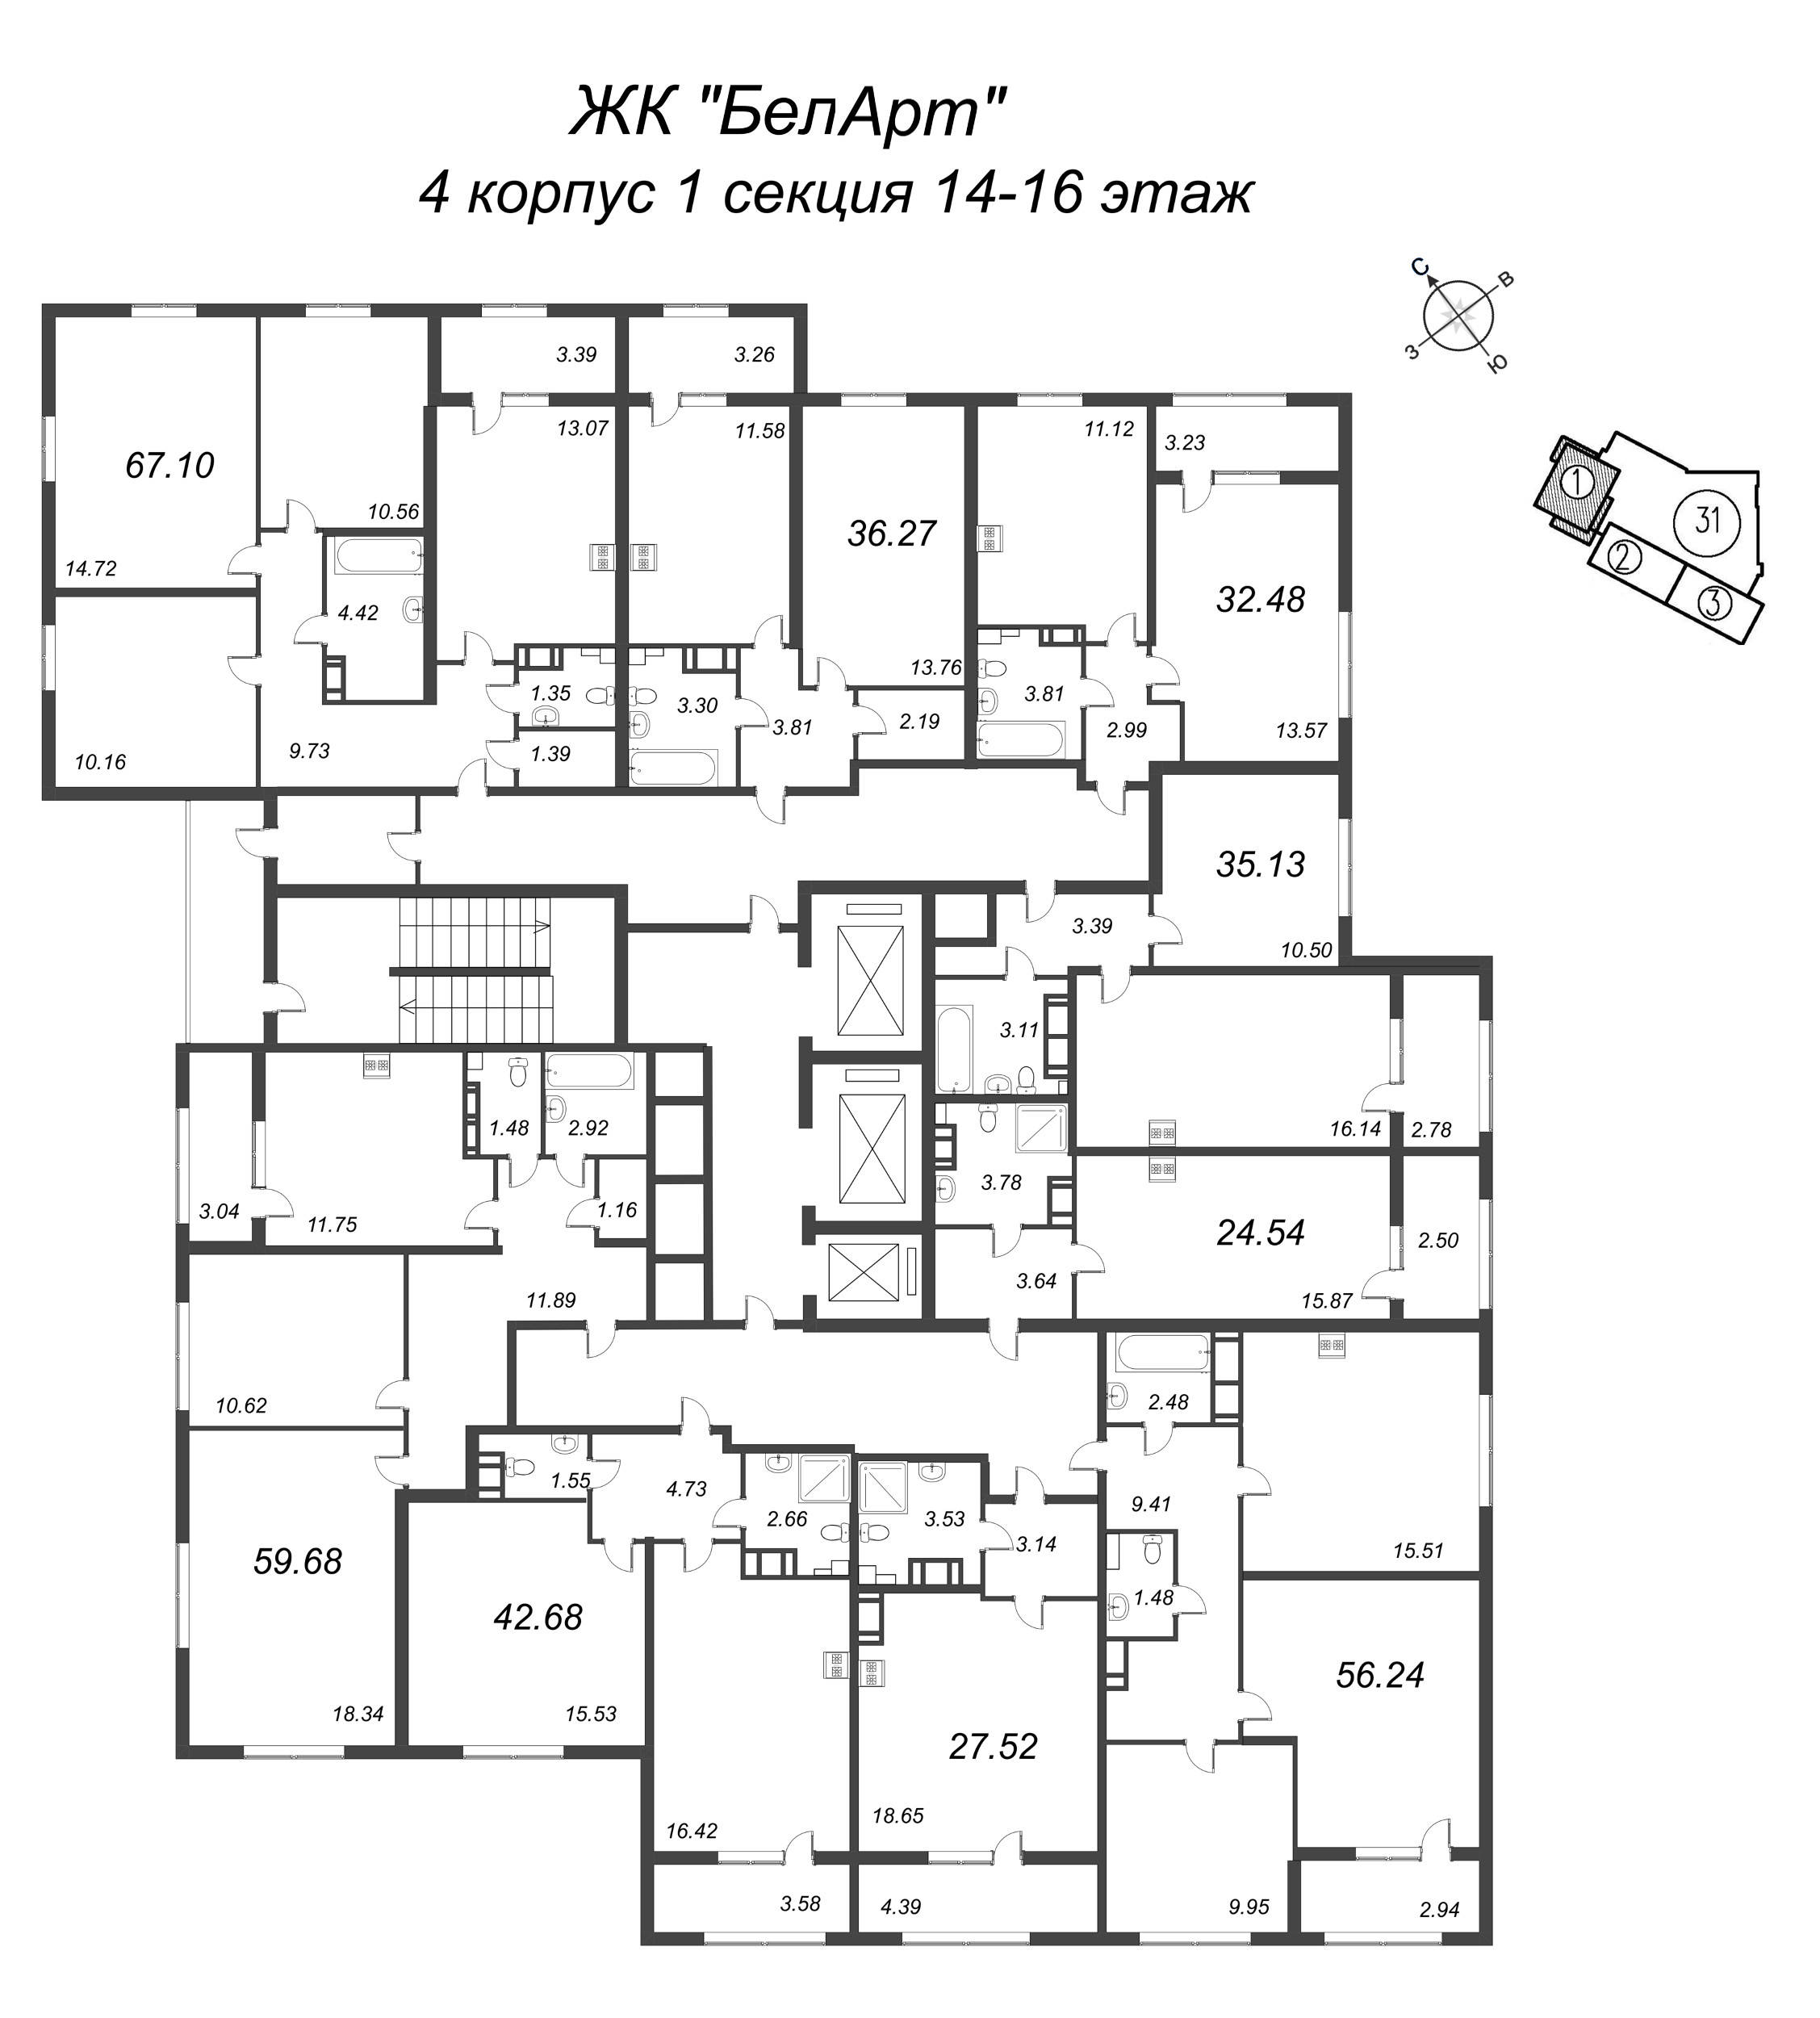 2-комнатная (Евро) квартира, 35.13 м² - планировка этажа